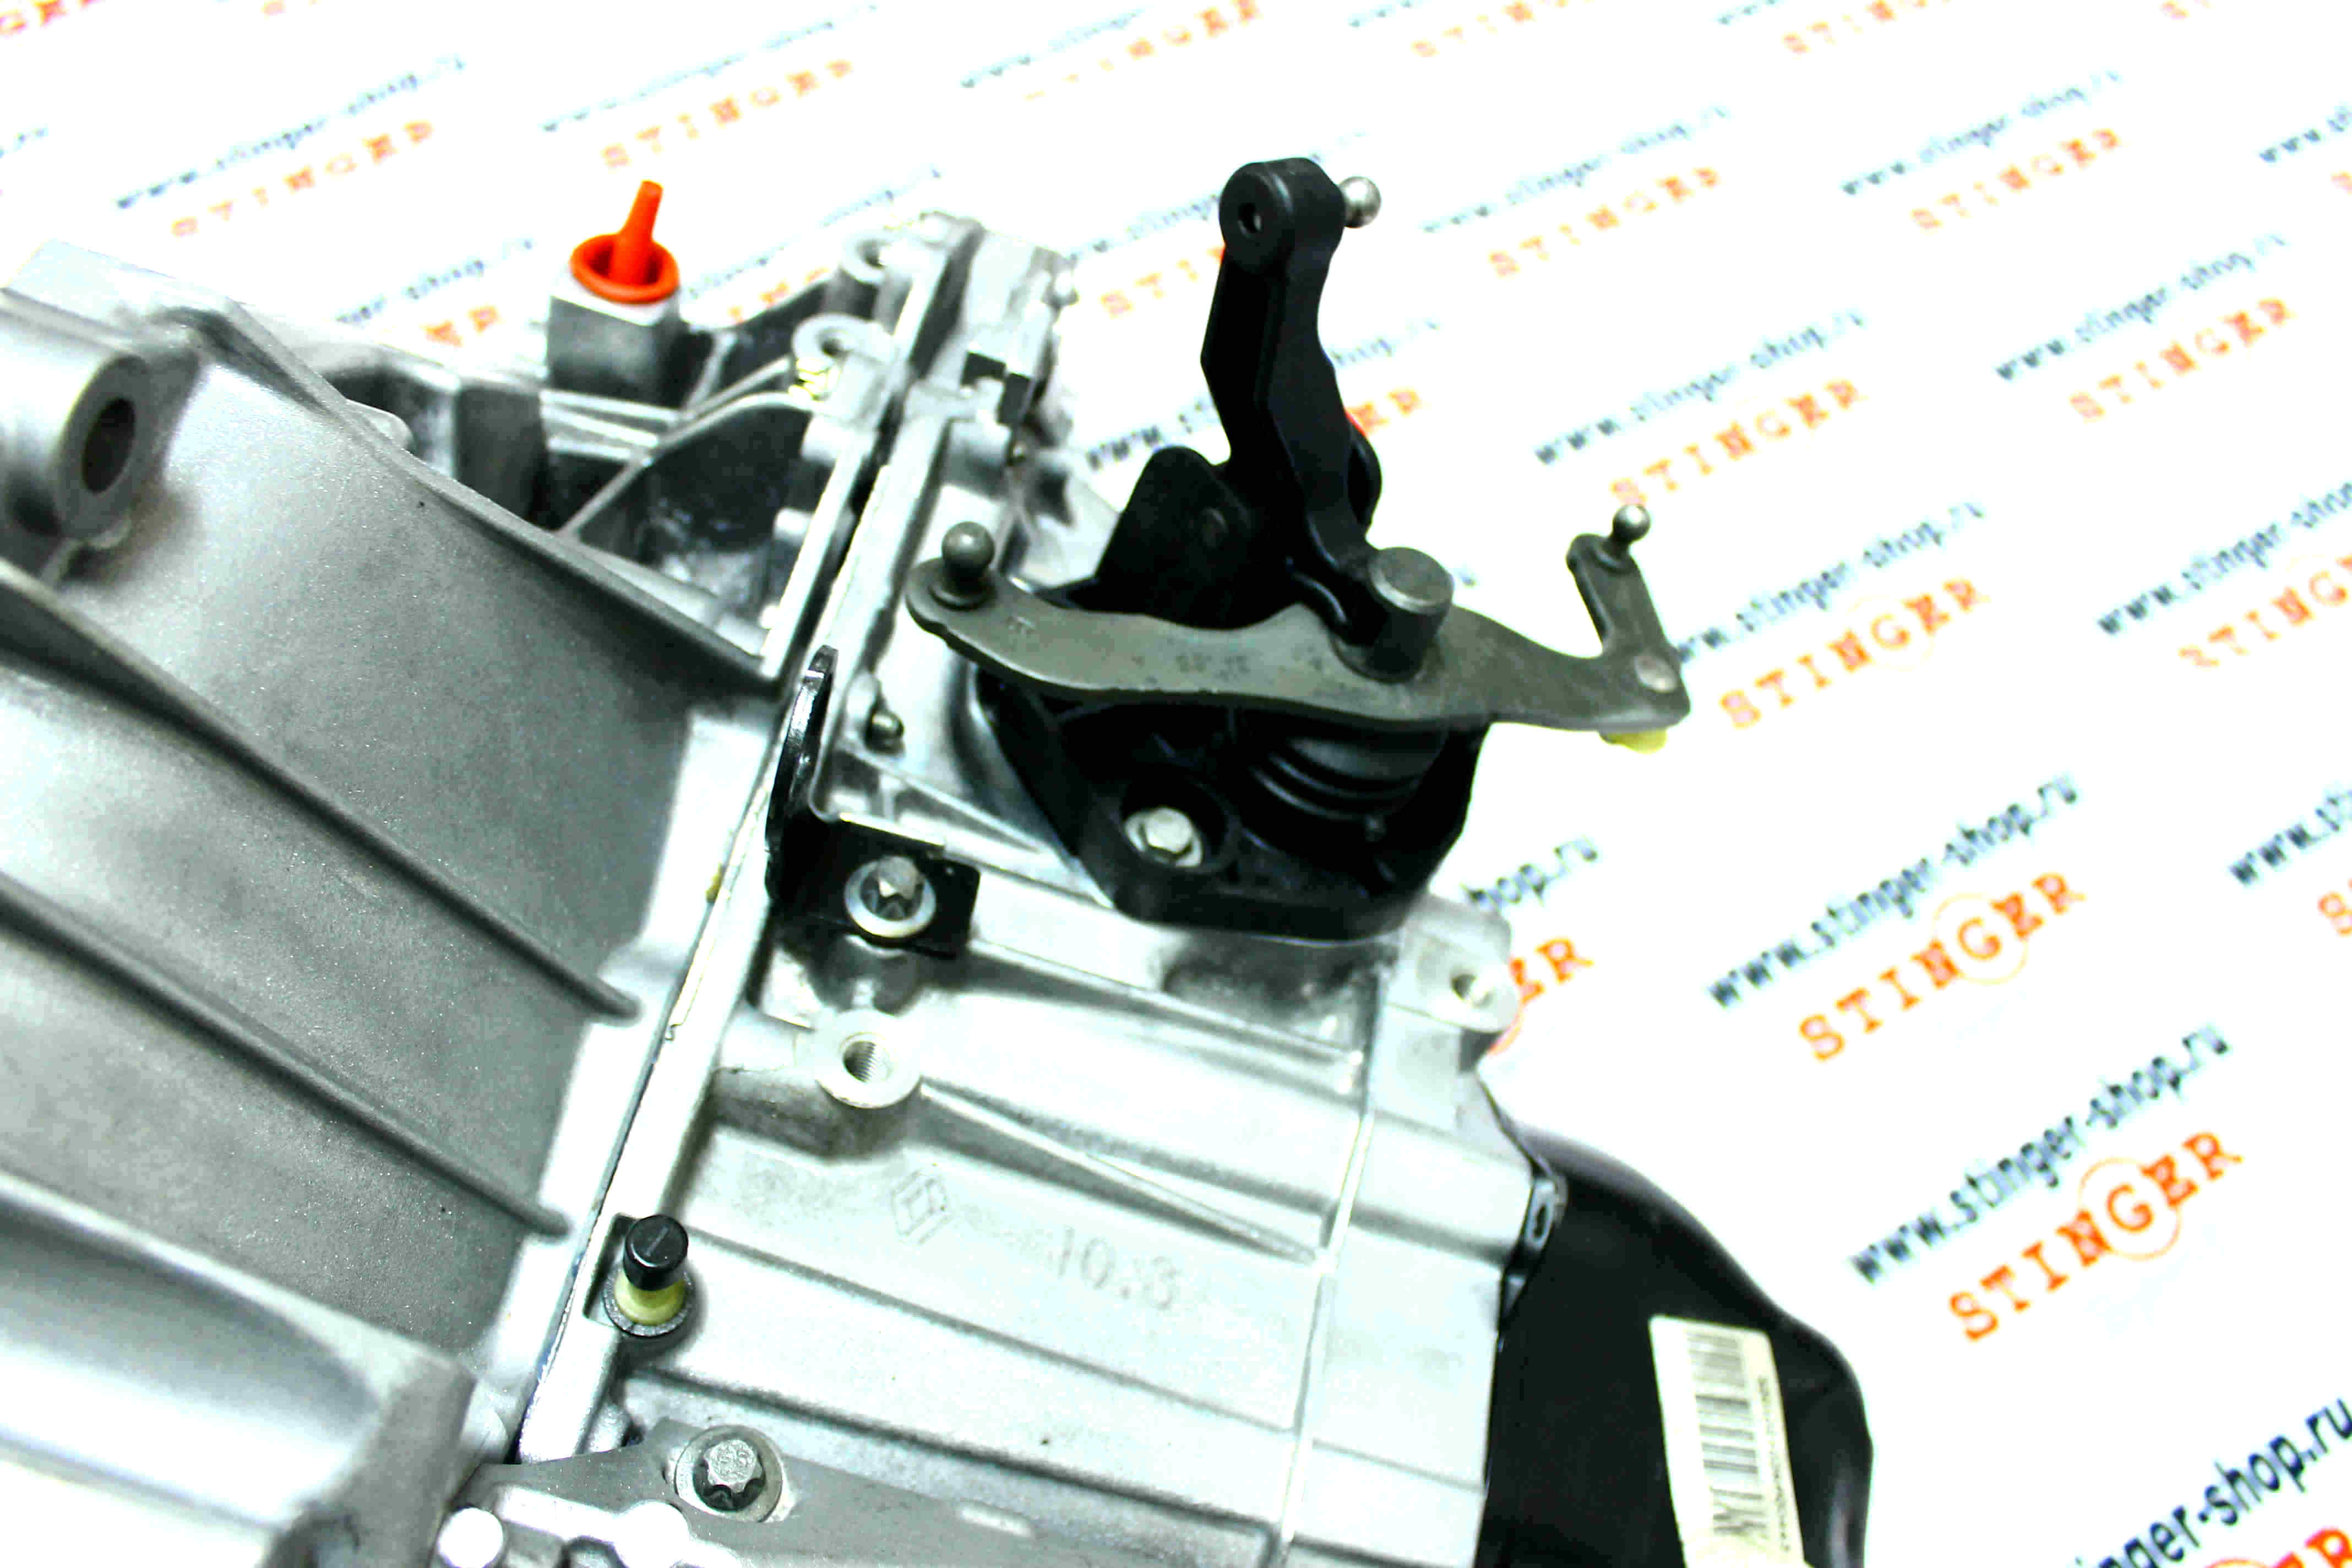 КПП ВАЗ X-Ray 5-и ступ., тросиковая (JR-518, под двигатель ВАЗ 21129 16V), Франция. Фото �2